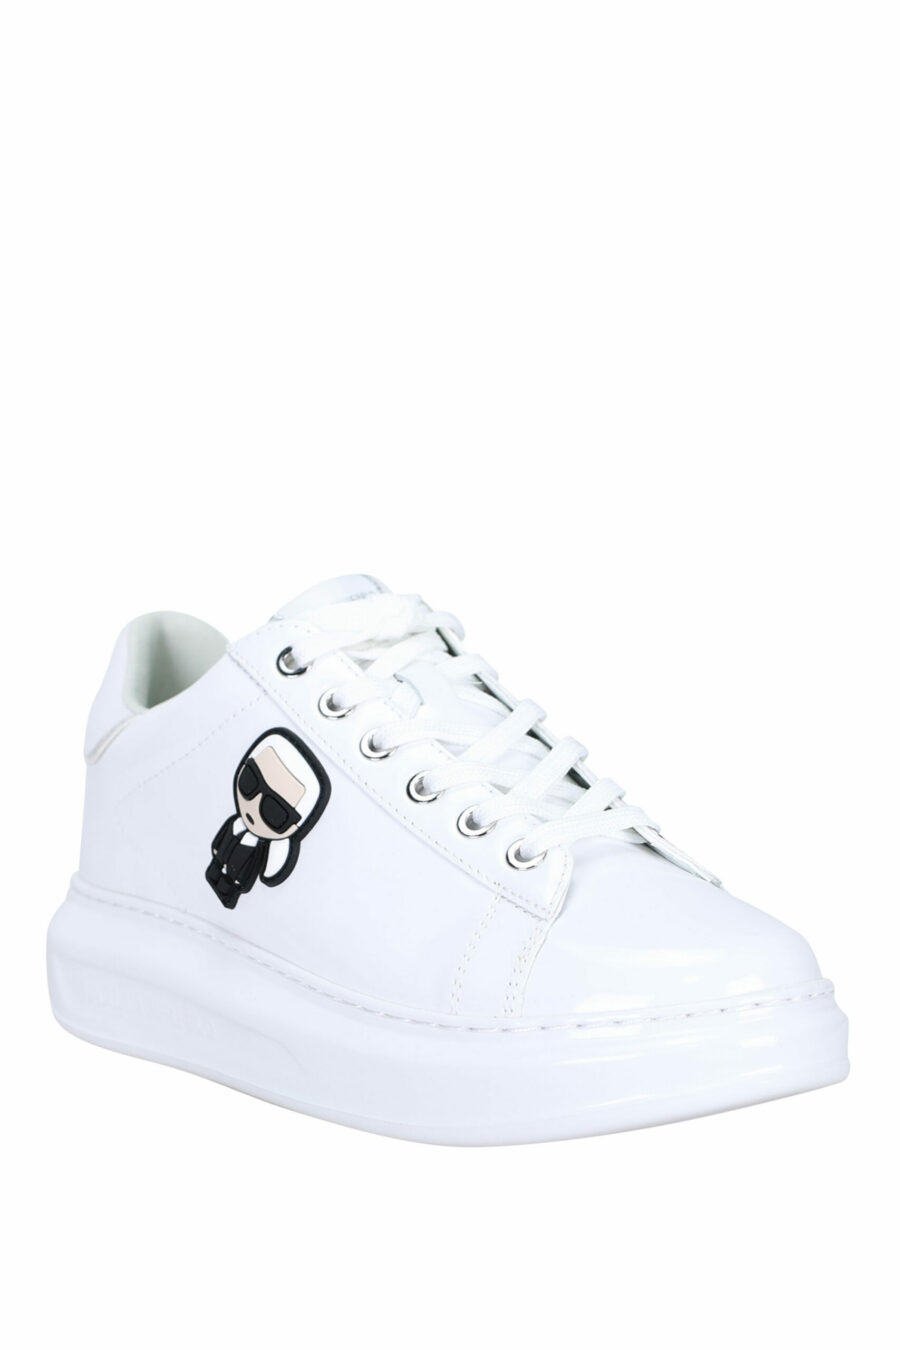 Zapatillas blancas brillantes "kapri Ikon" con logo - 5059529204753 1 scaled